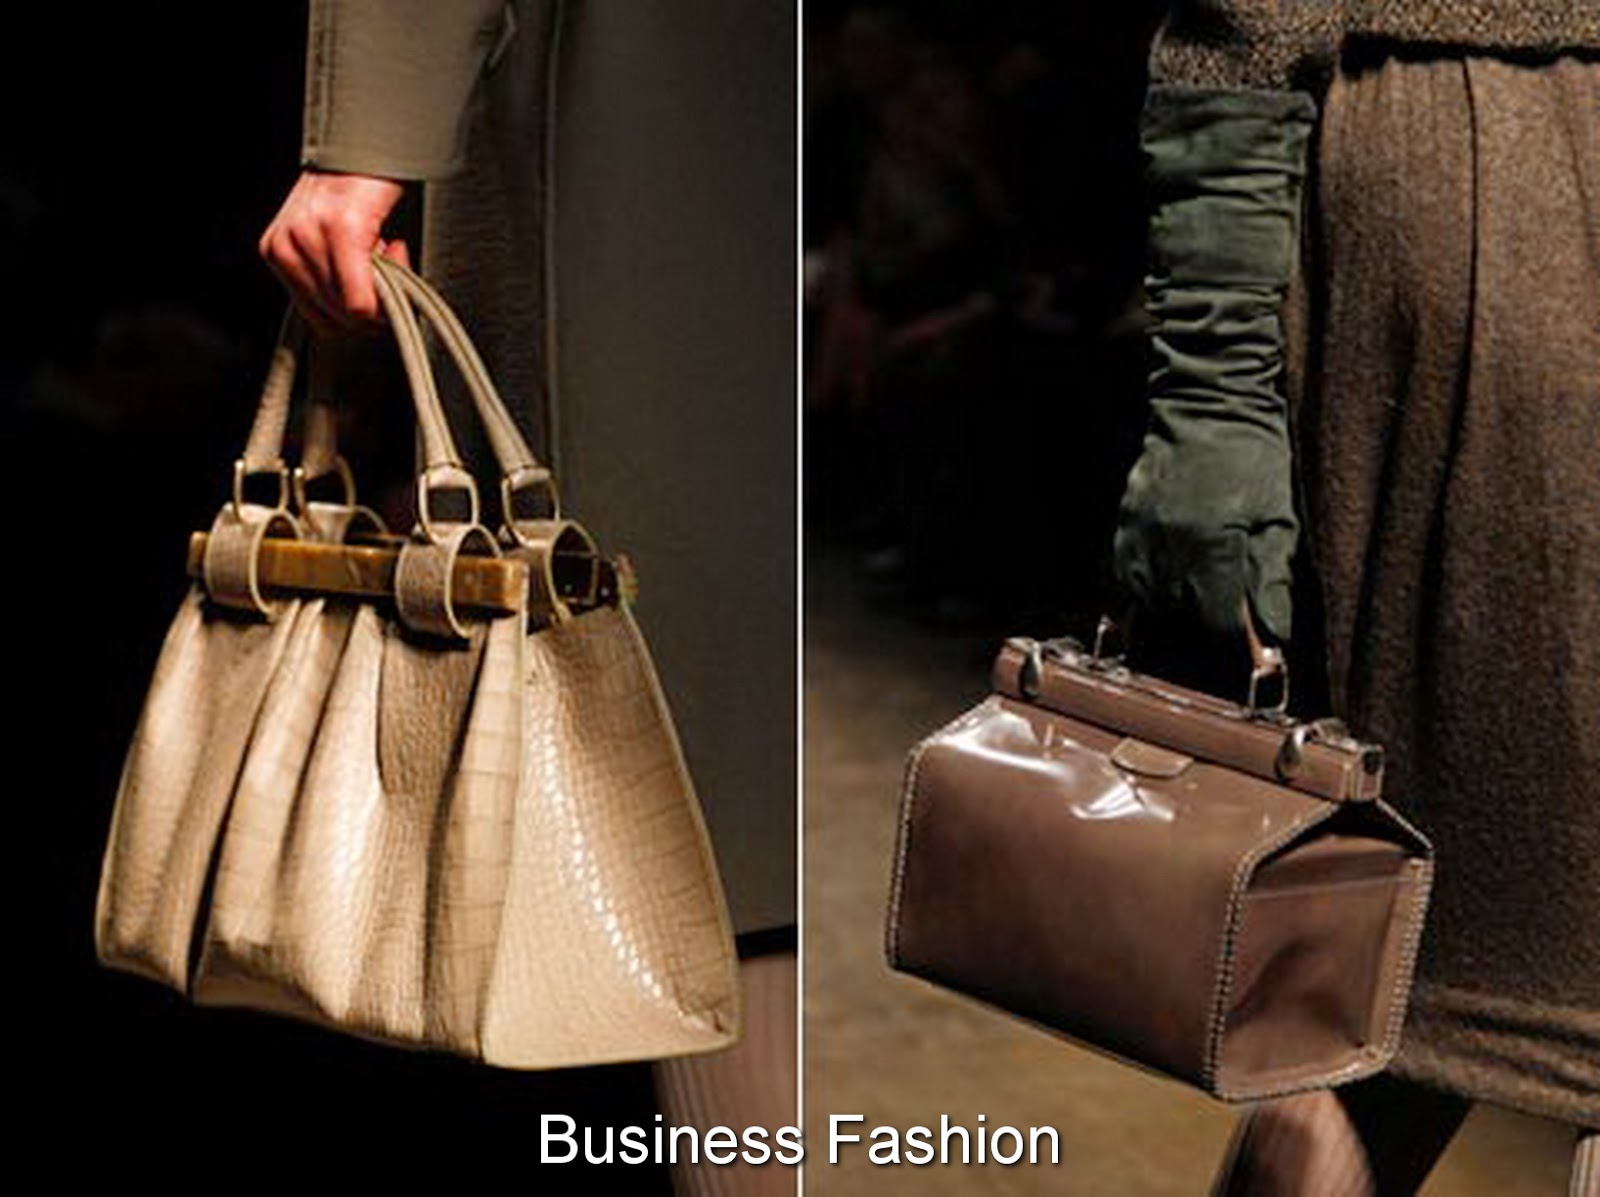 Business Fashion